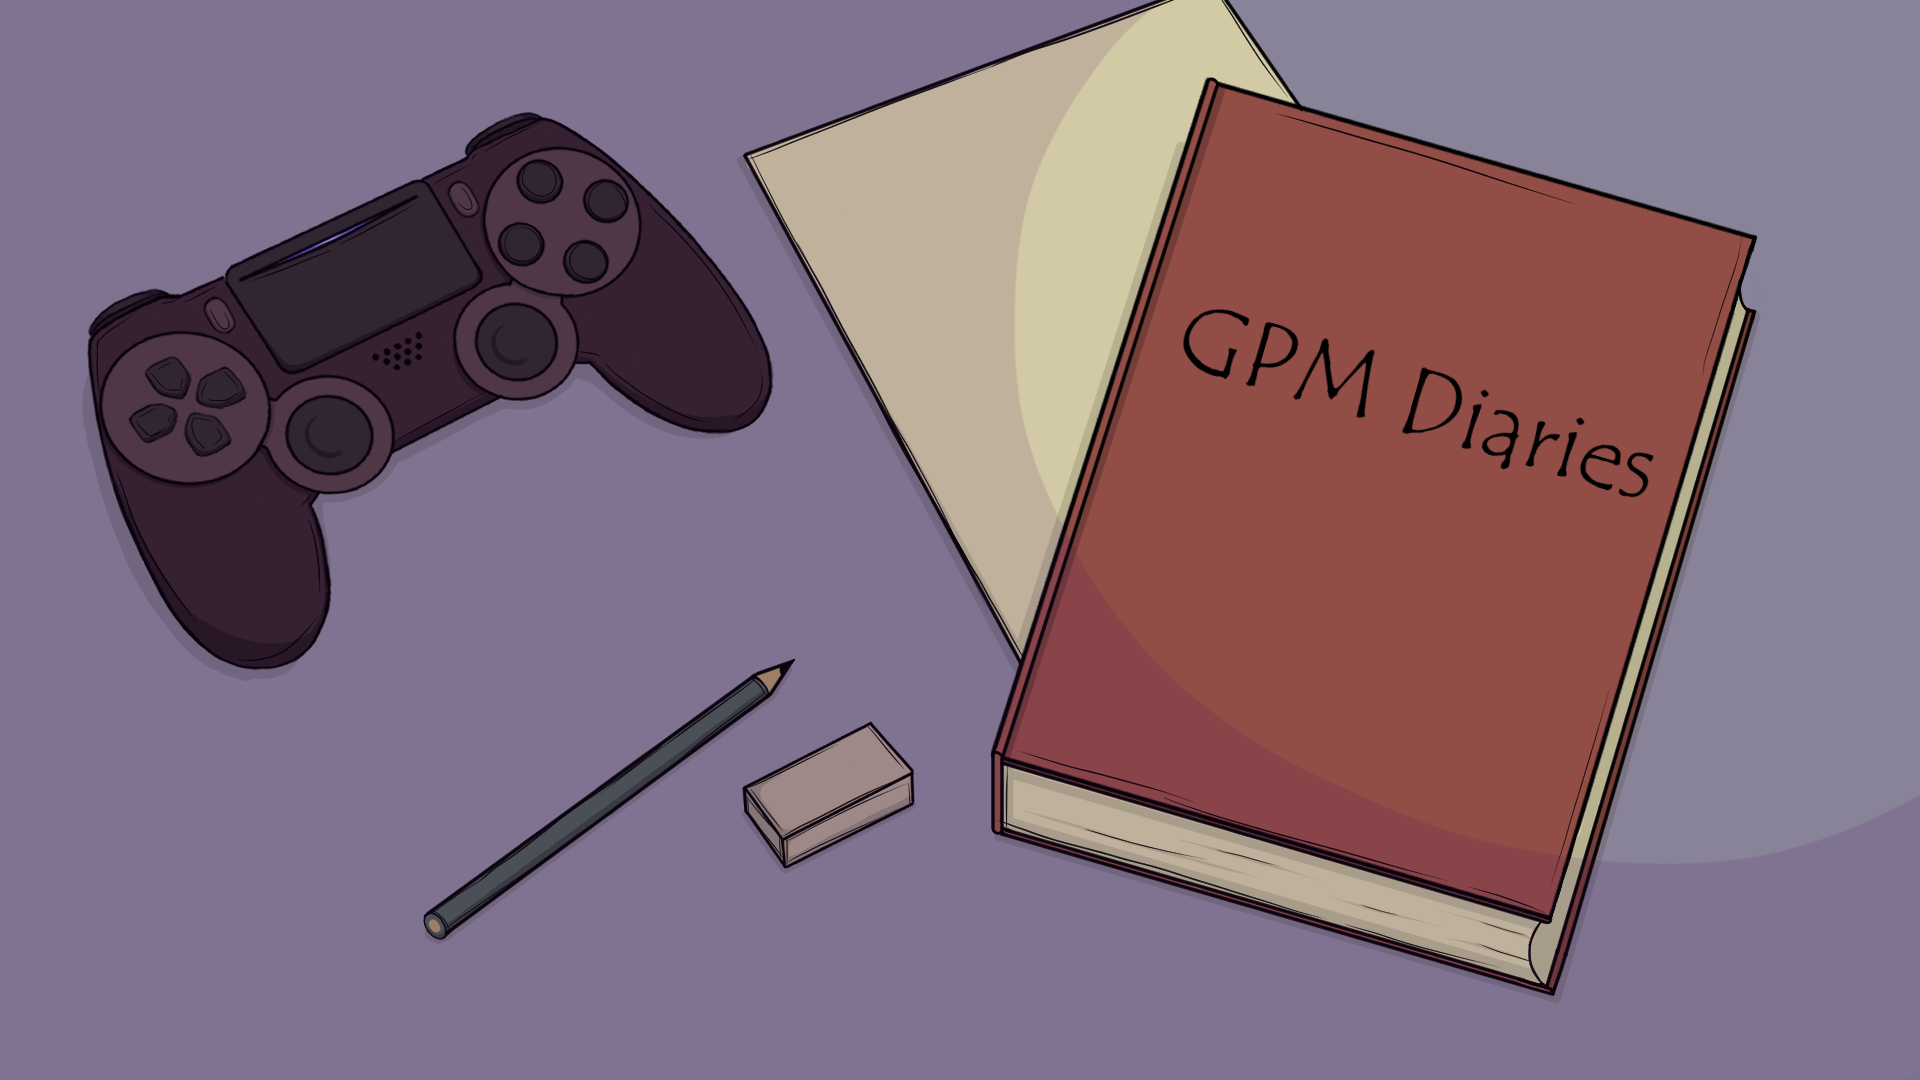 GPM Diaries